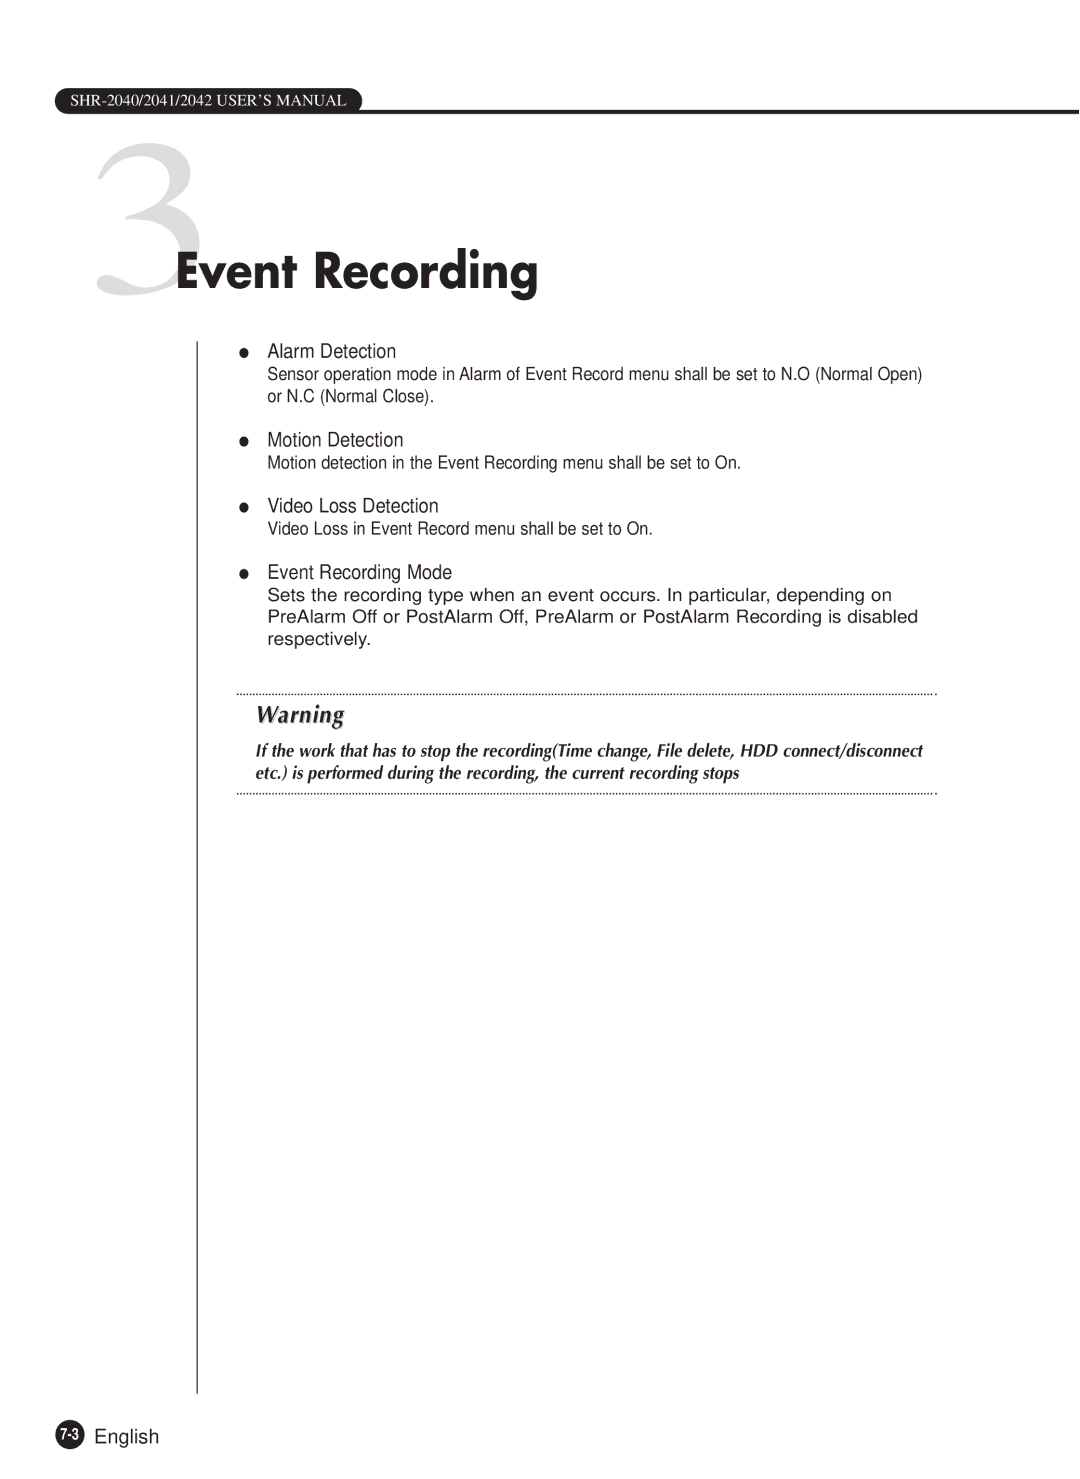 Samsung SHR-2040P manual 3Event Recording, Alarm Detection, Motion Detection, Video Loss Detection, Event Recording Mode 